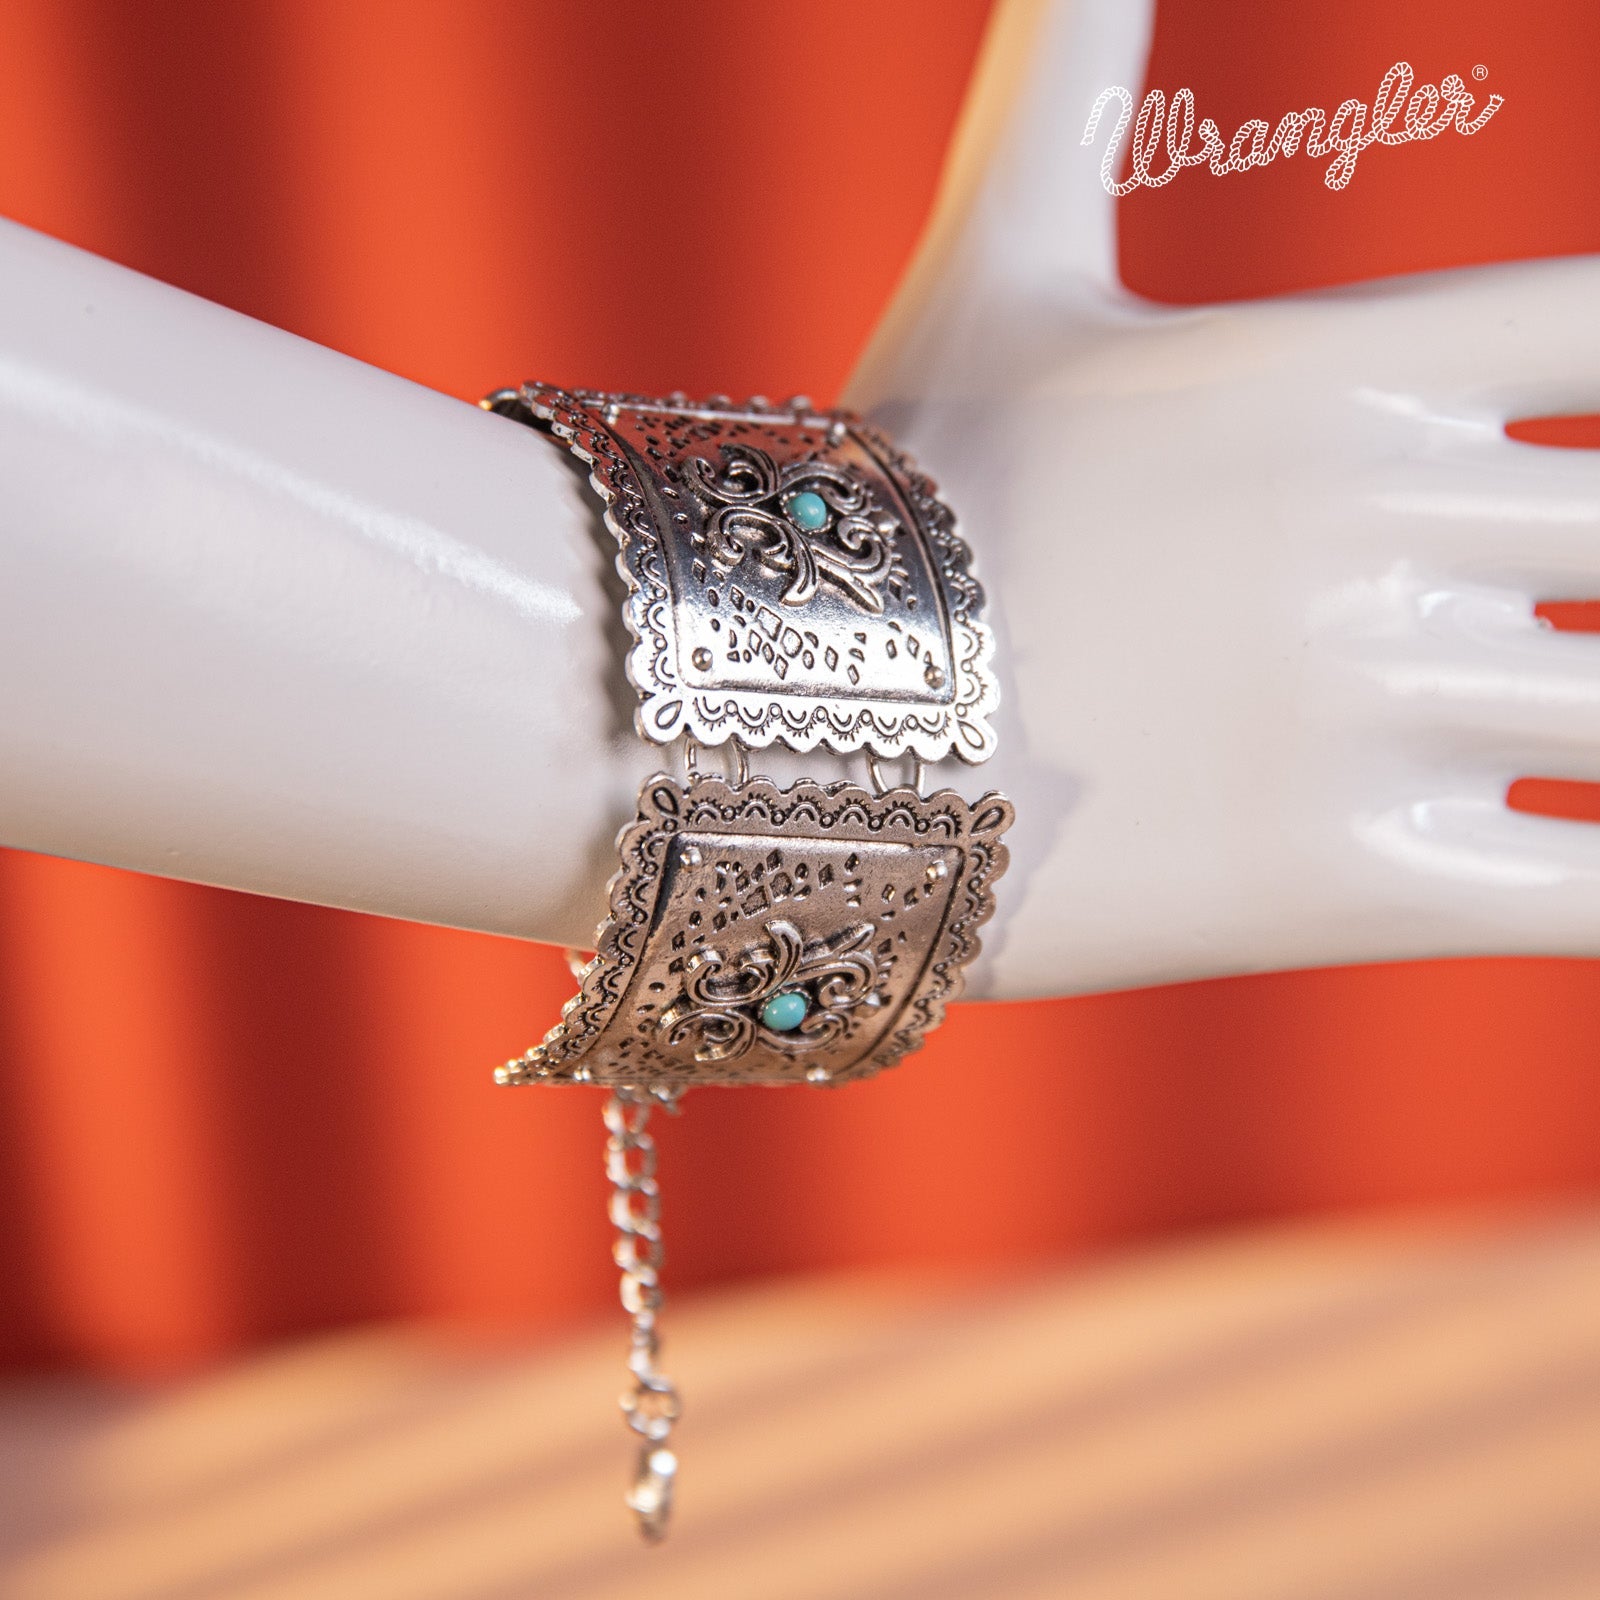 Wrangler  Silver Chain Concho Cuff Bracelet Turquoise Stone - Cowgirl Wear